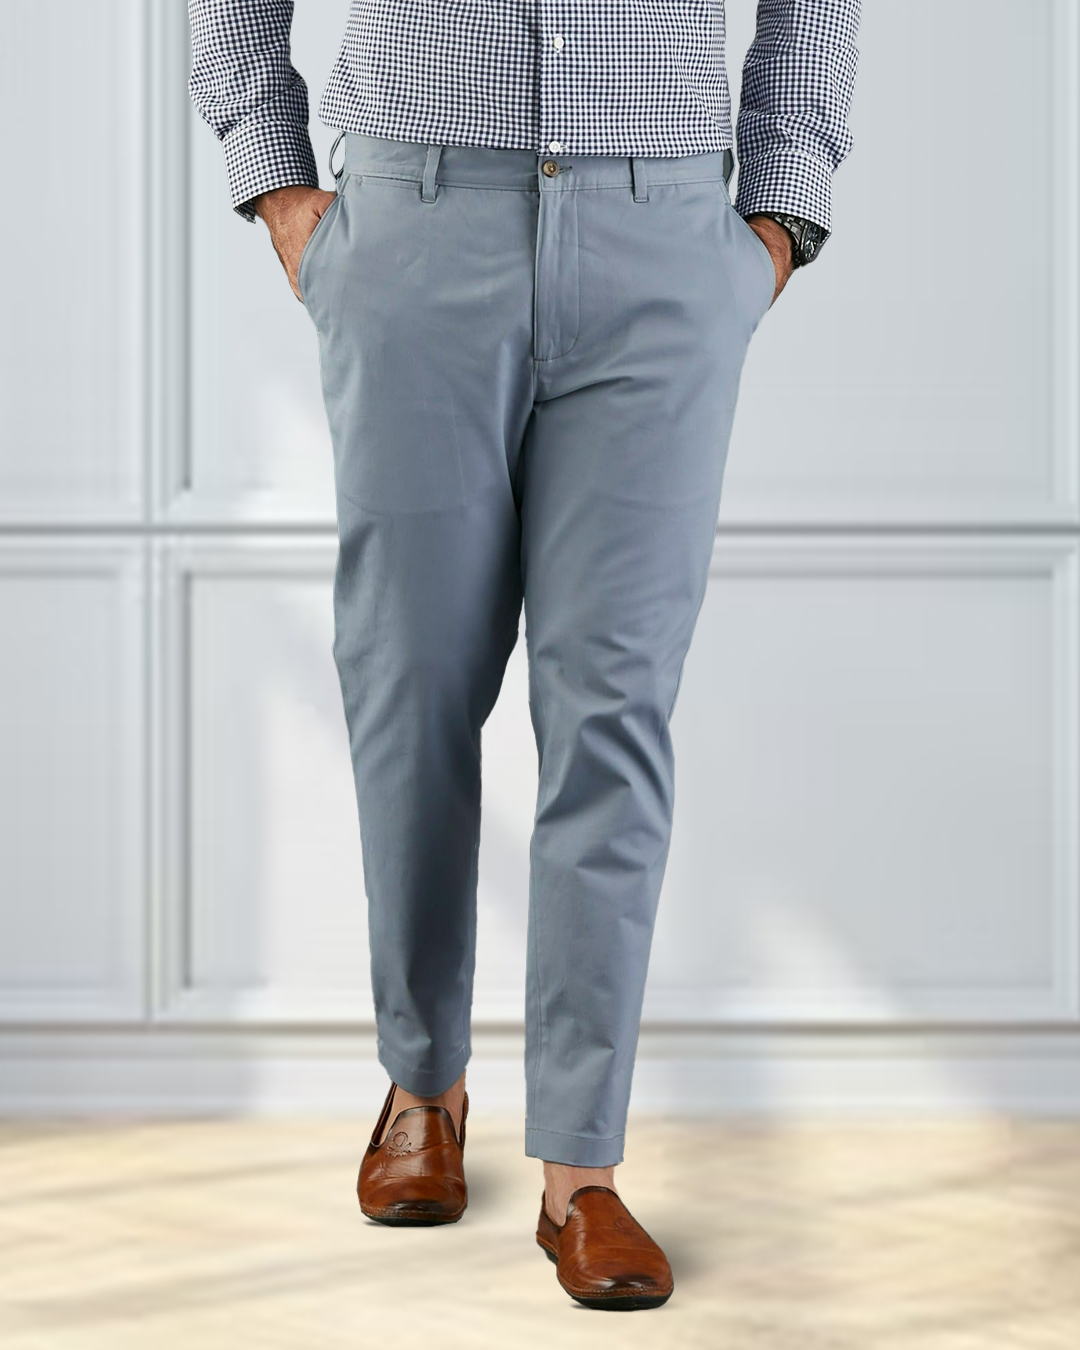 Model  wearing custom Genoa Chino pants for men by Luxire in soft blue grey